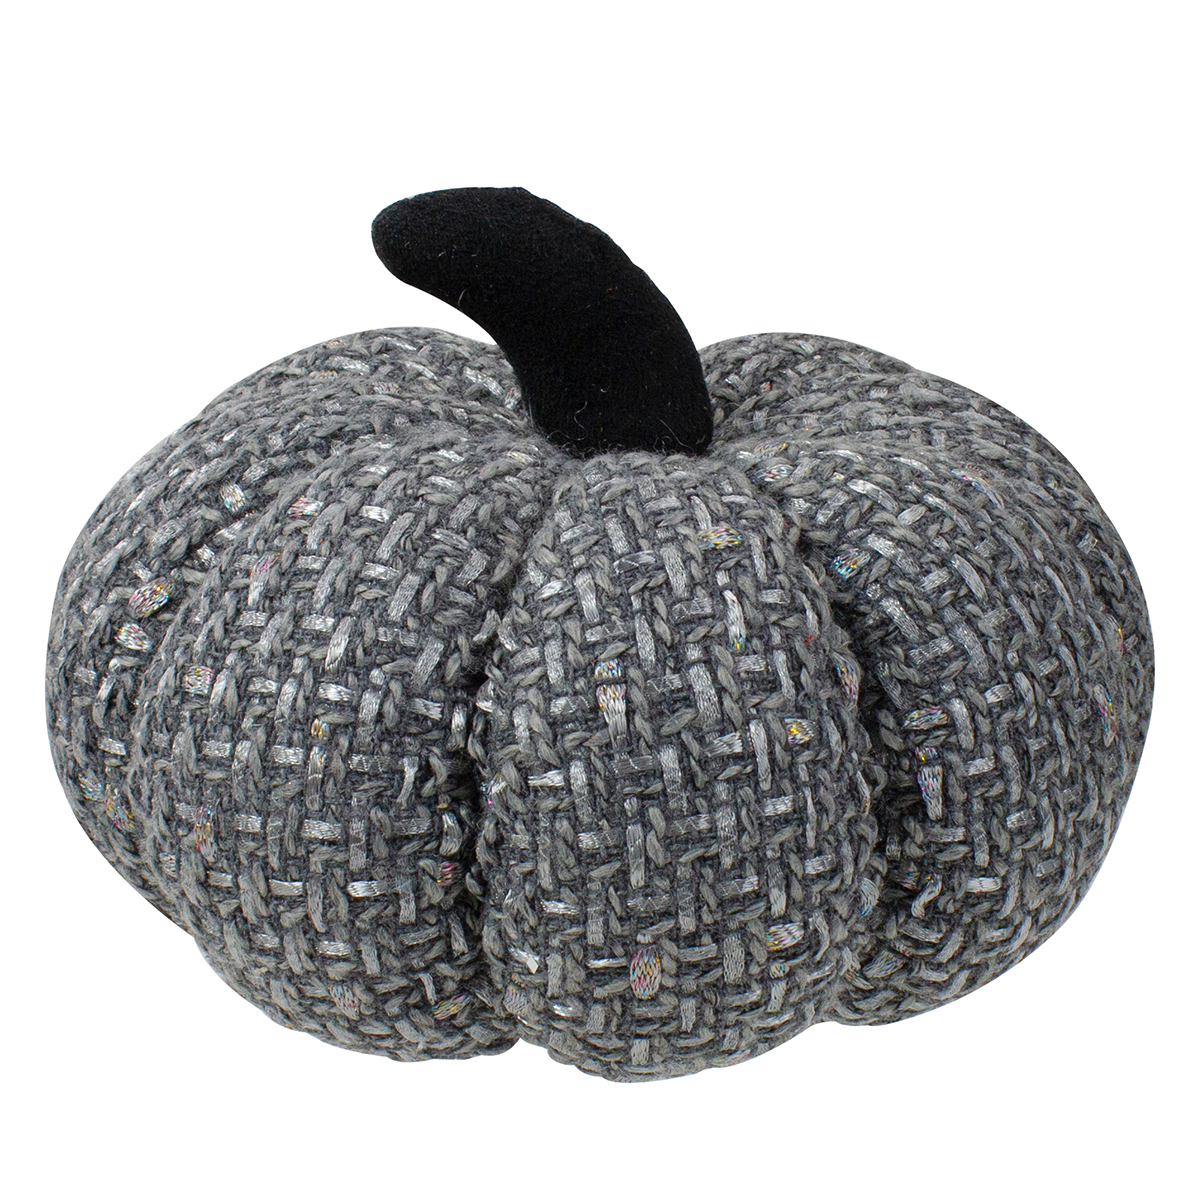 Northlight Seasonal 7.5in. Grey Knitted Fall Harvest Pumpkin